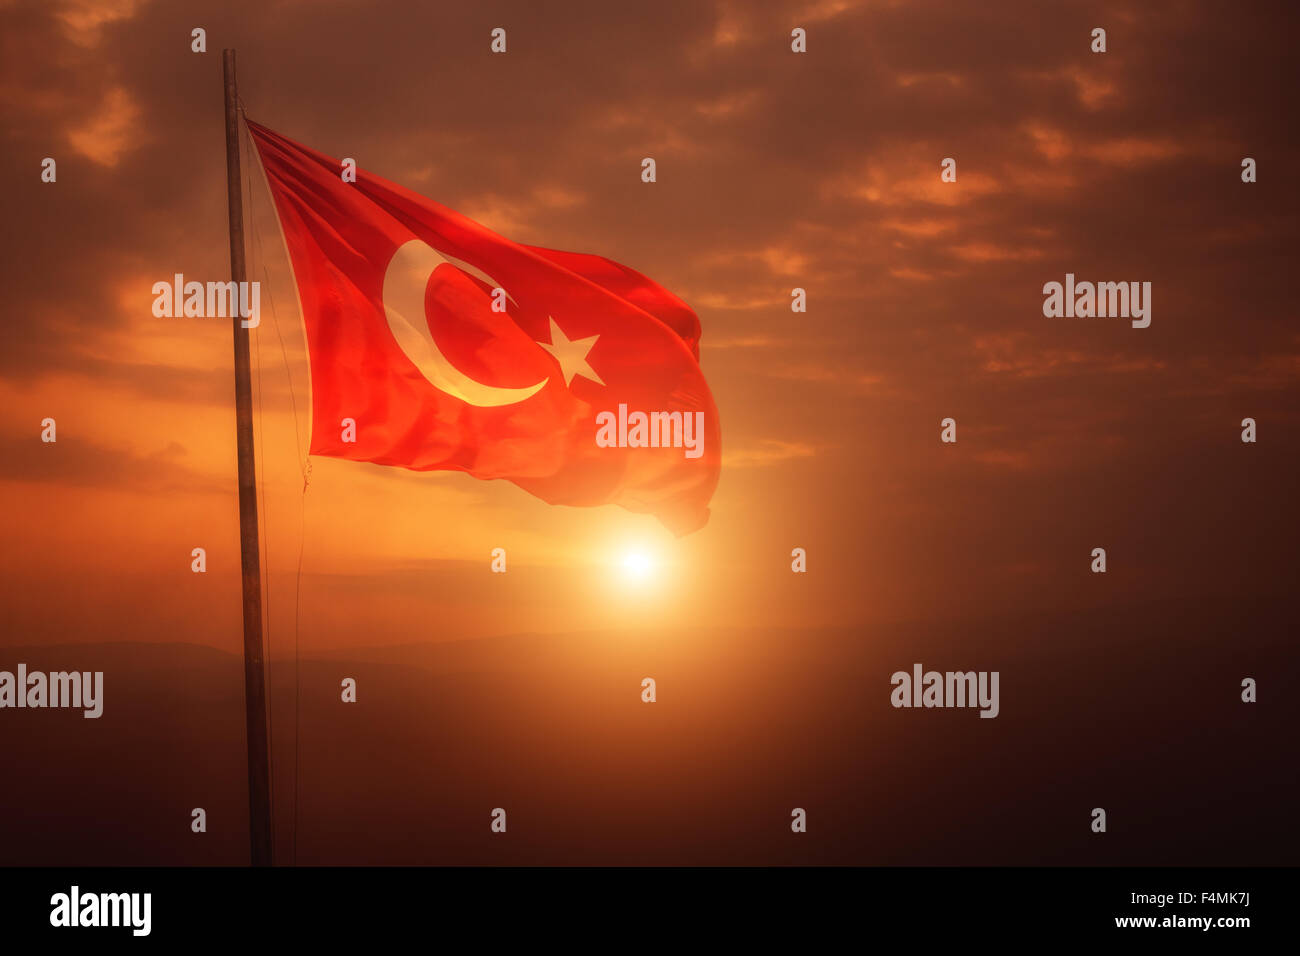 A Turkish Flag Flies Over The Sun In Turkey Stock Photo Alamy